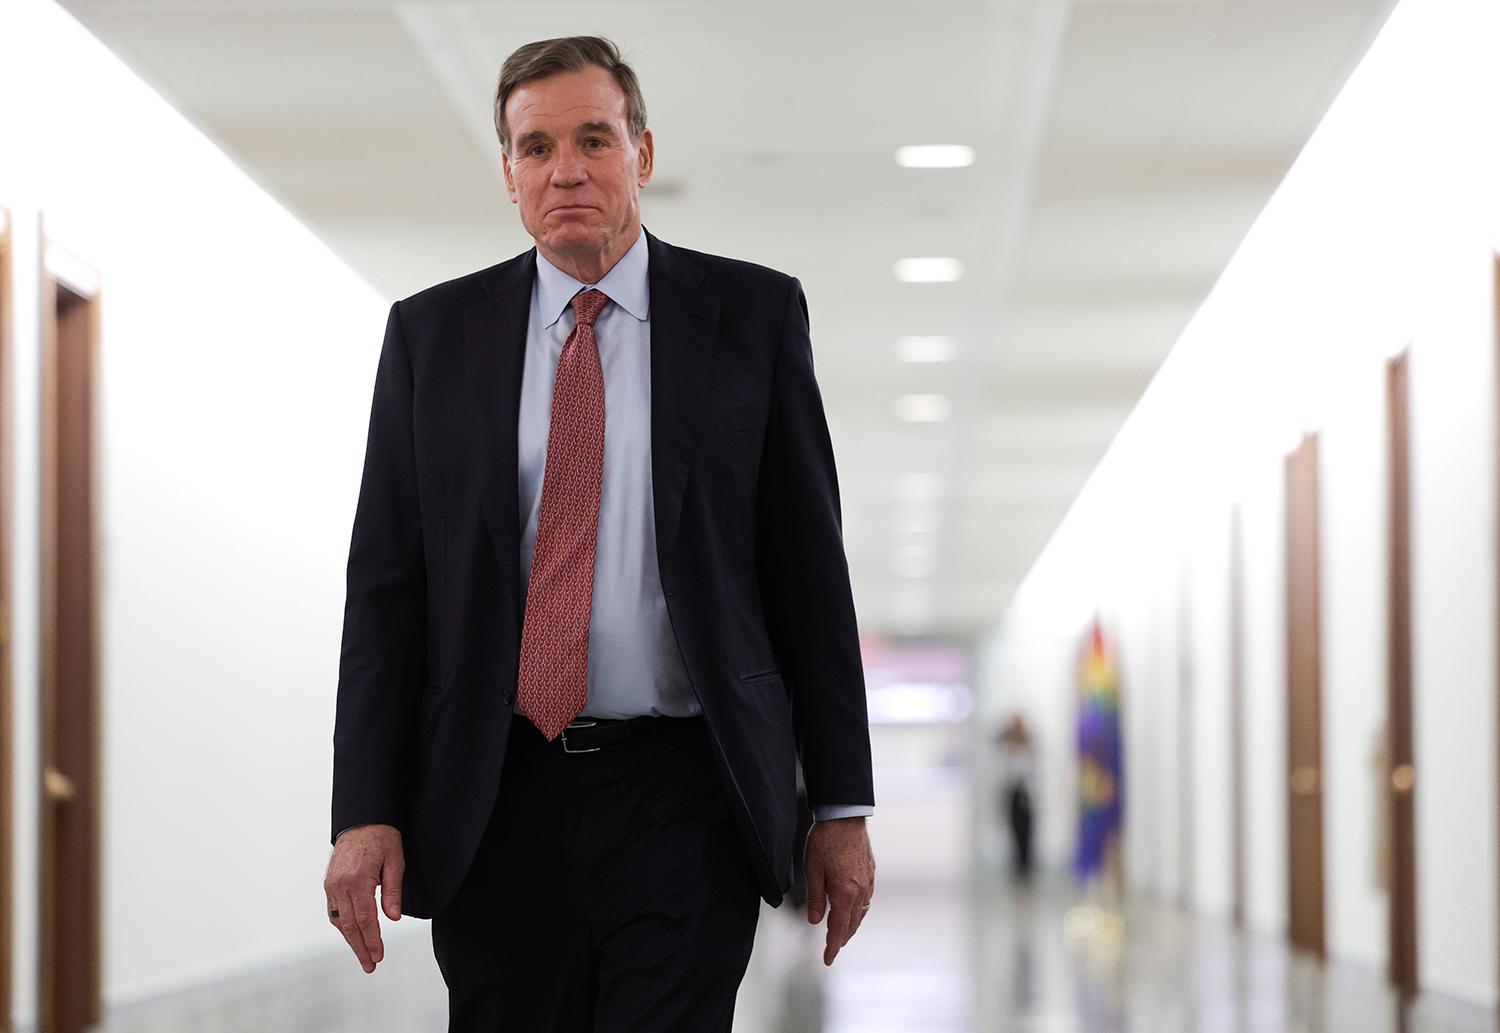 Sen. Mark Warner walks down a hallway on Capitol Hill